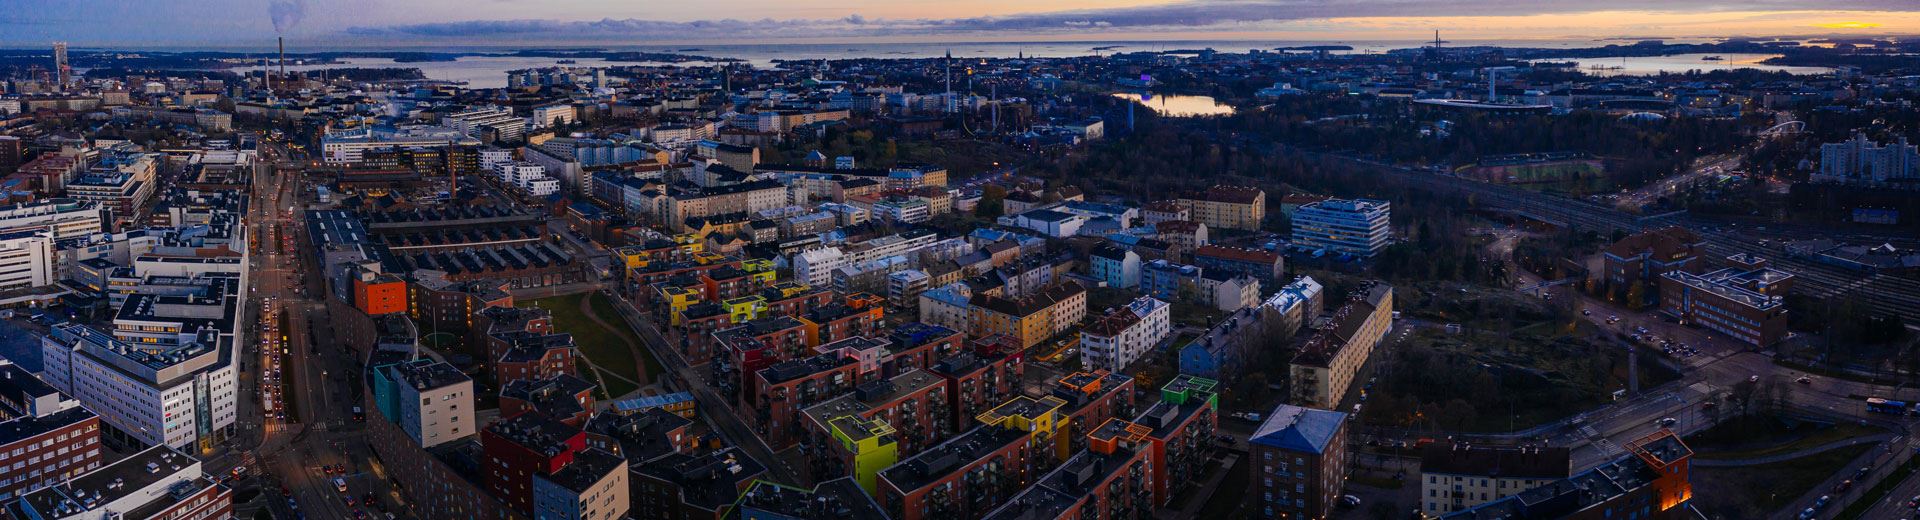 Konepaja area in Helsinki at night